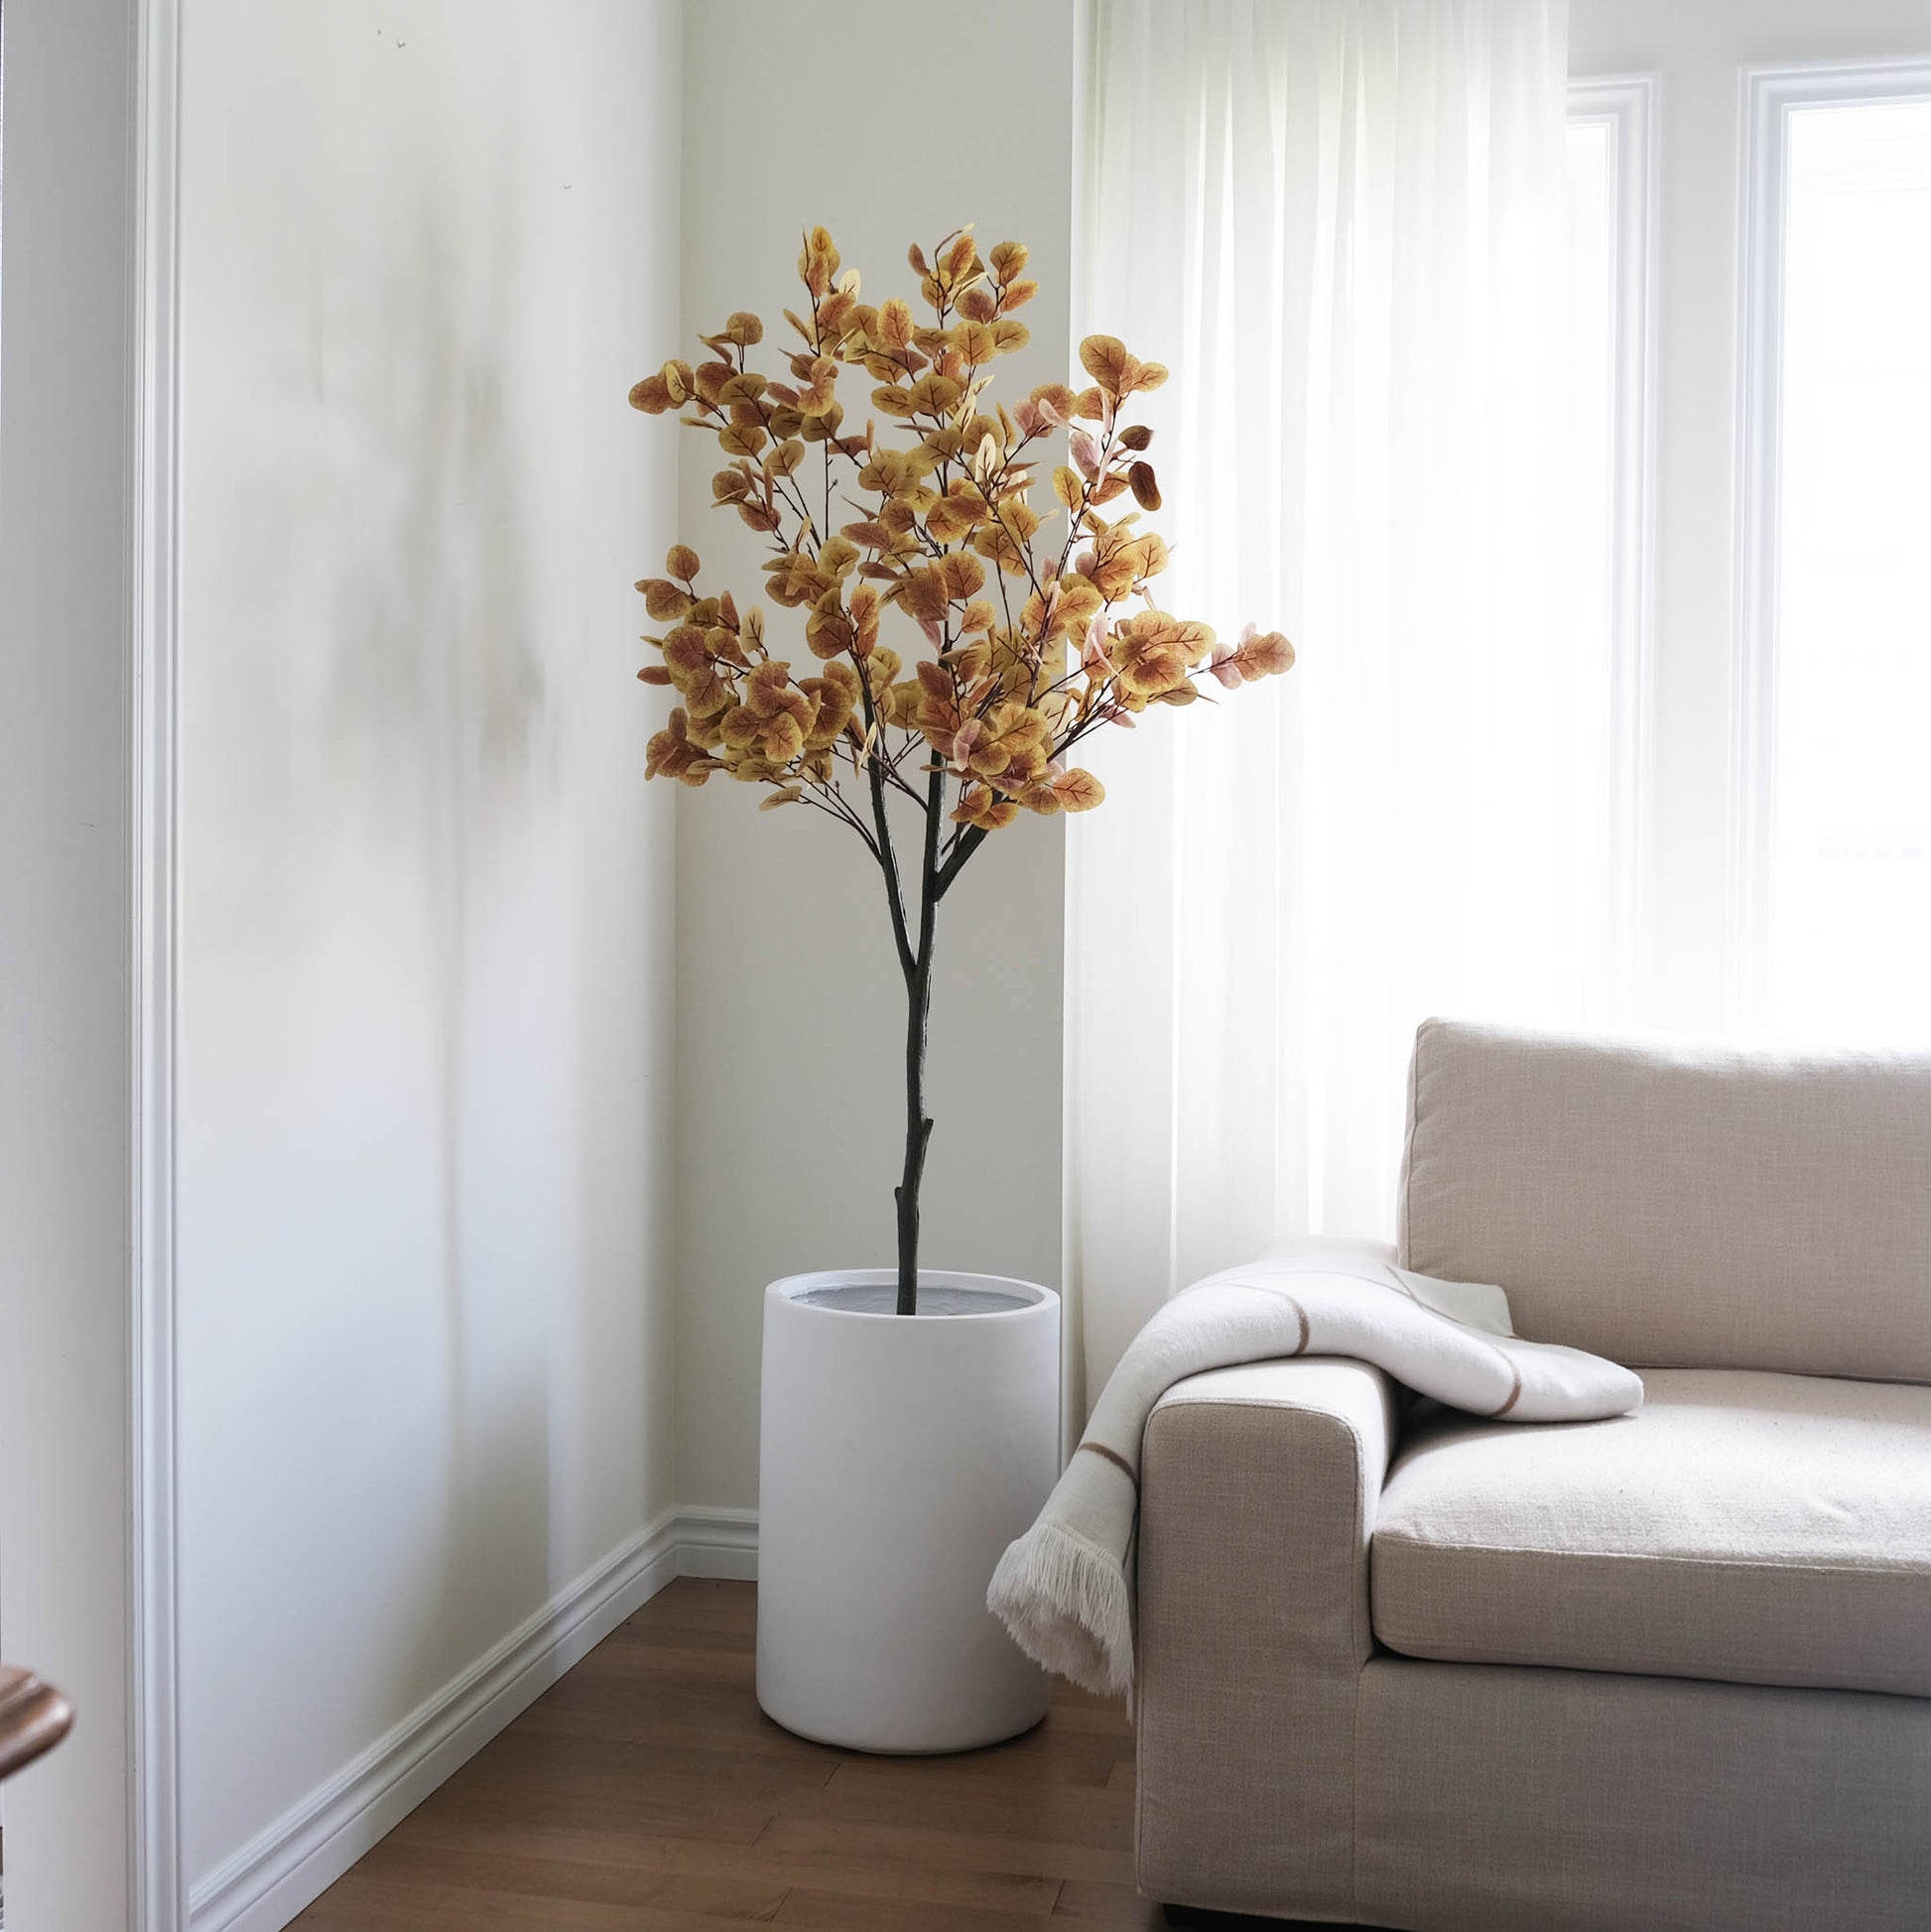 Sleek, modern indoor white fiberglass planter